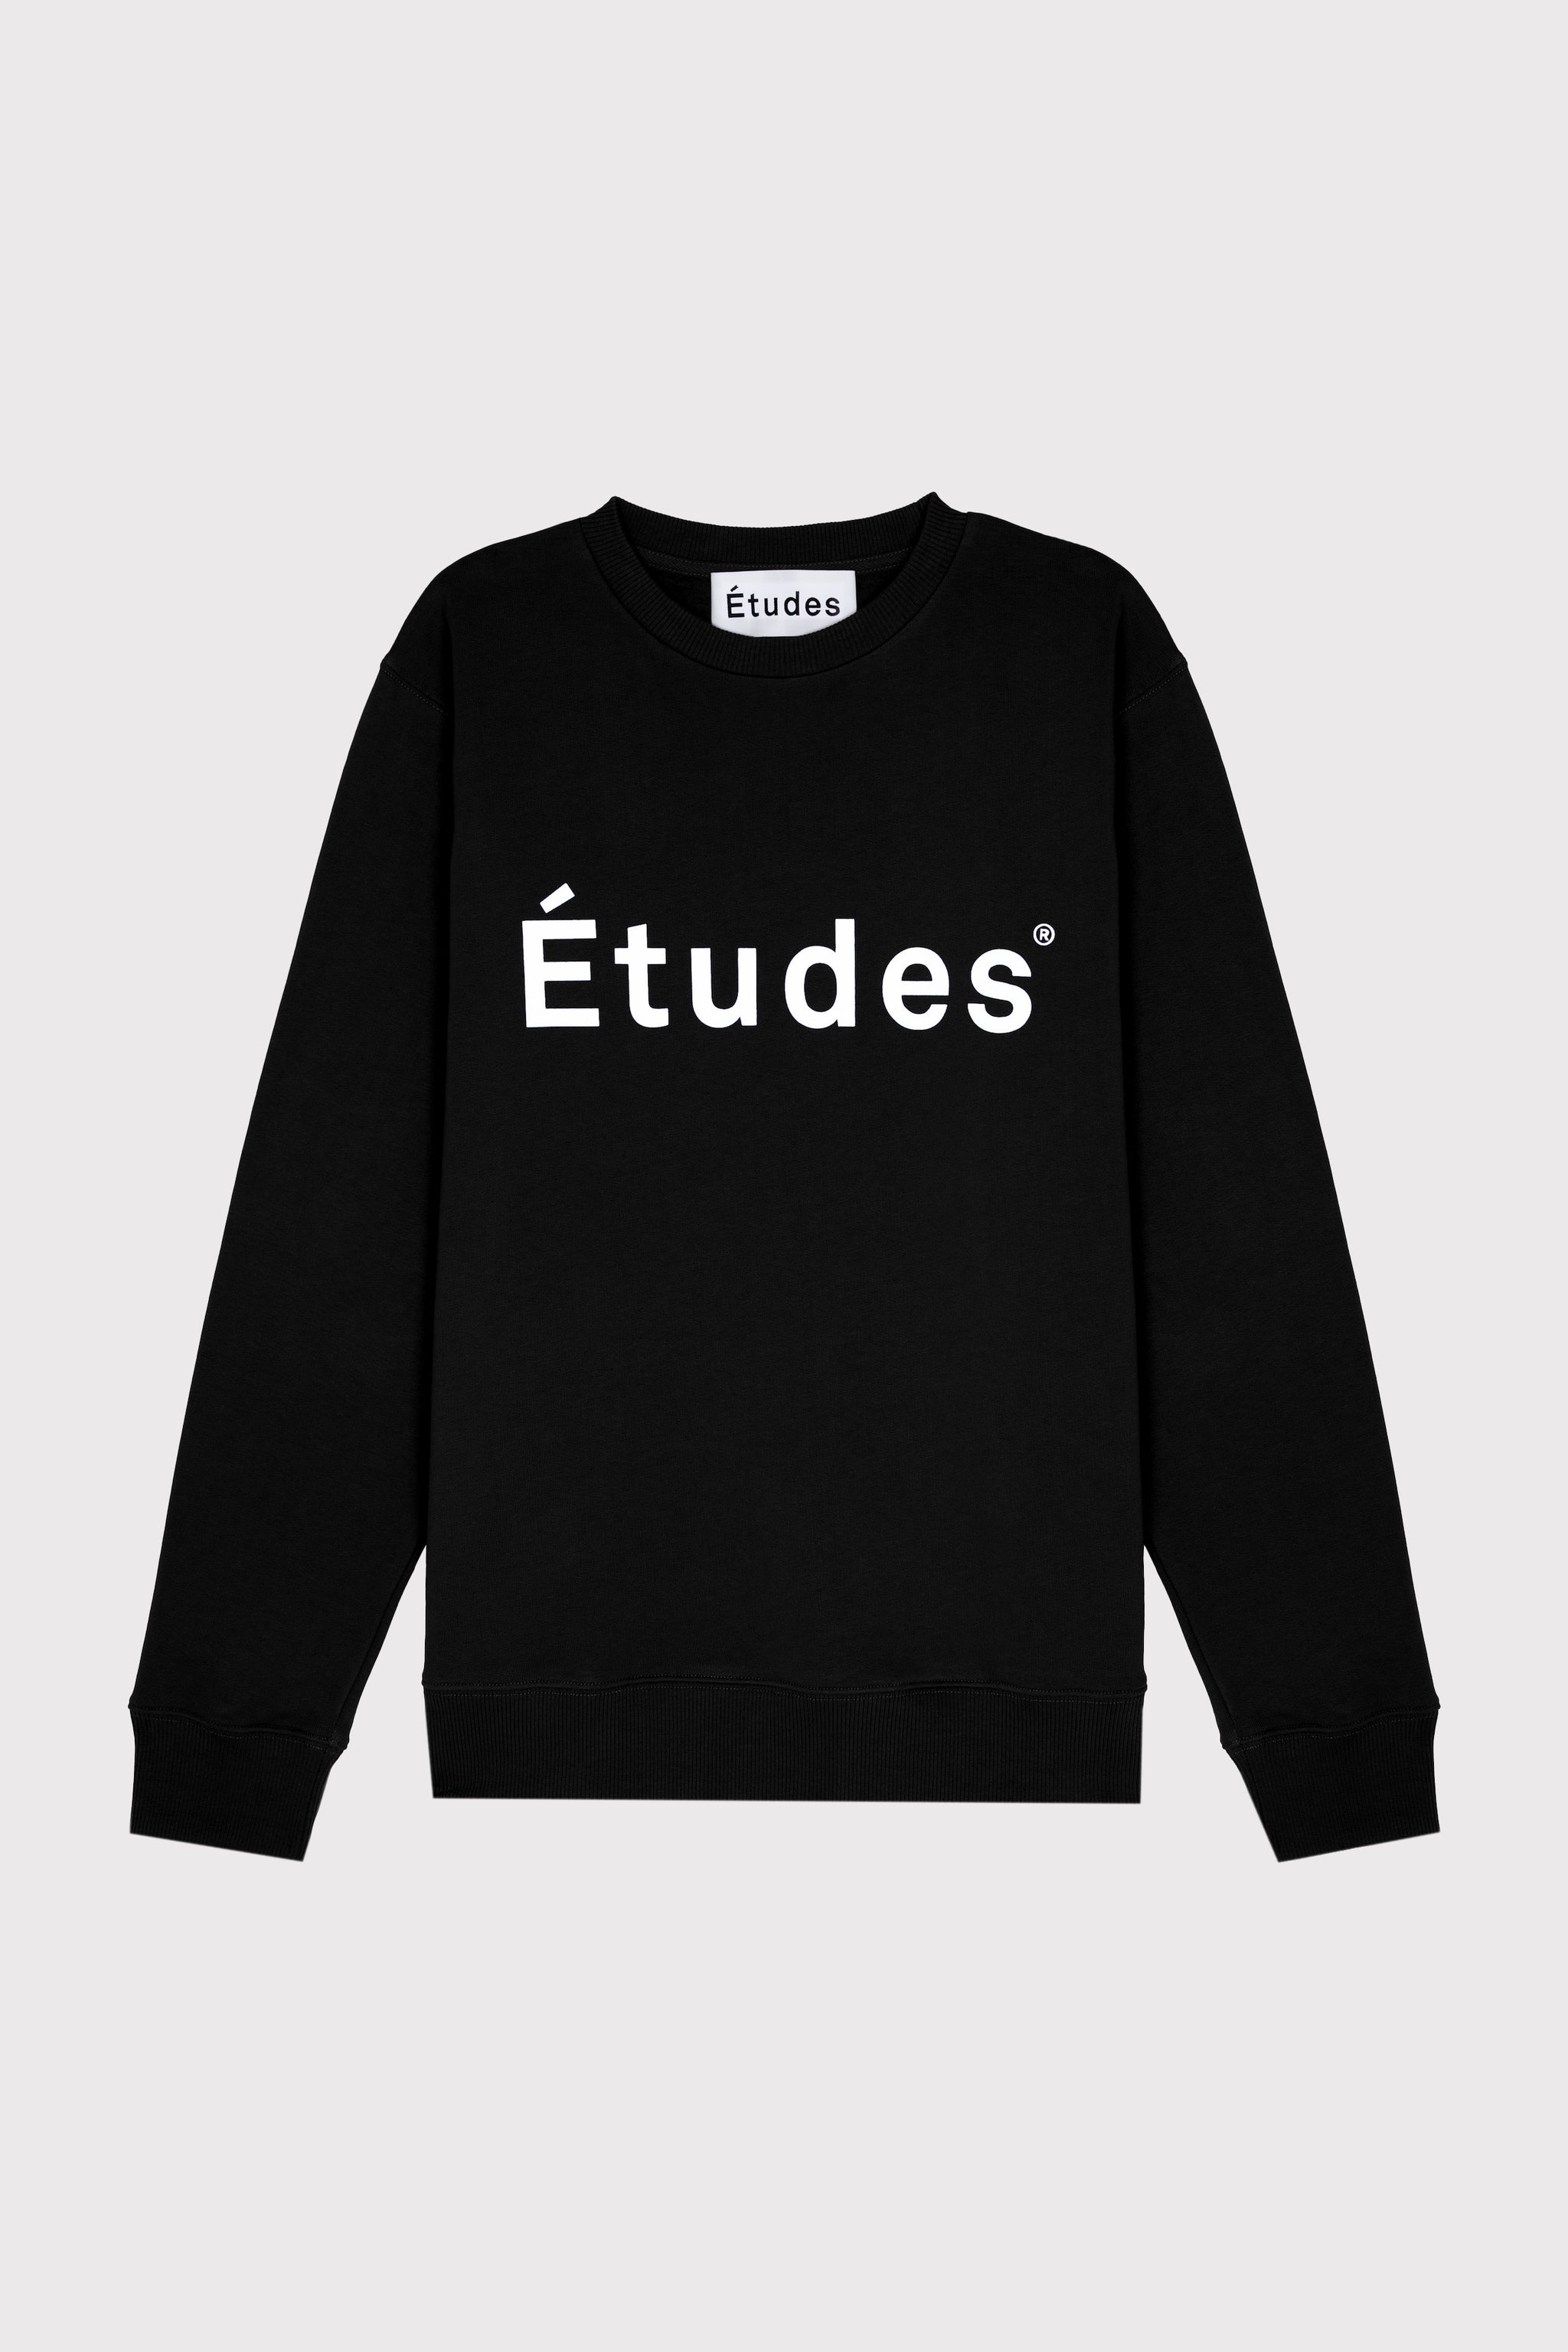 Études STORY ETUDES BLACK Sweatshirt 2